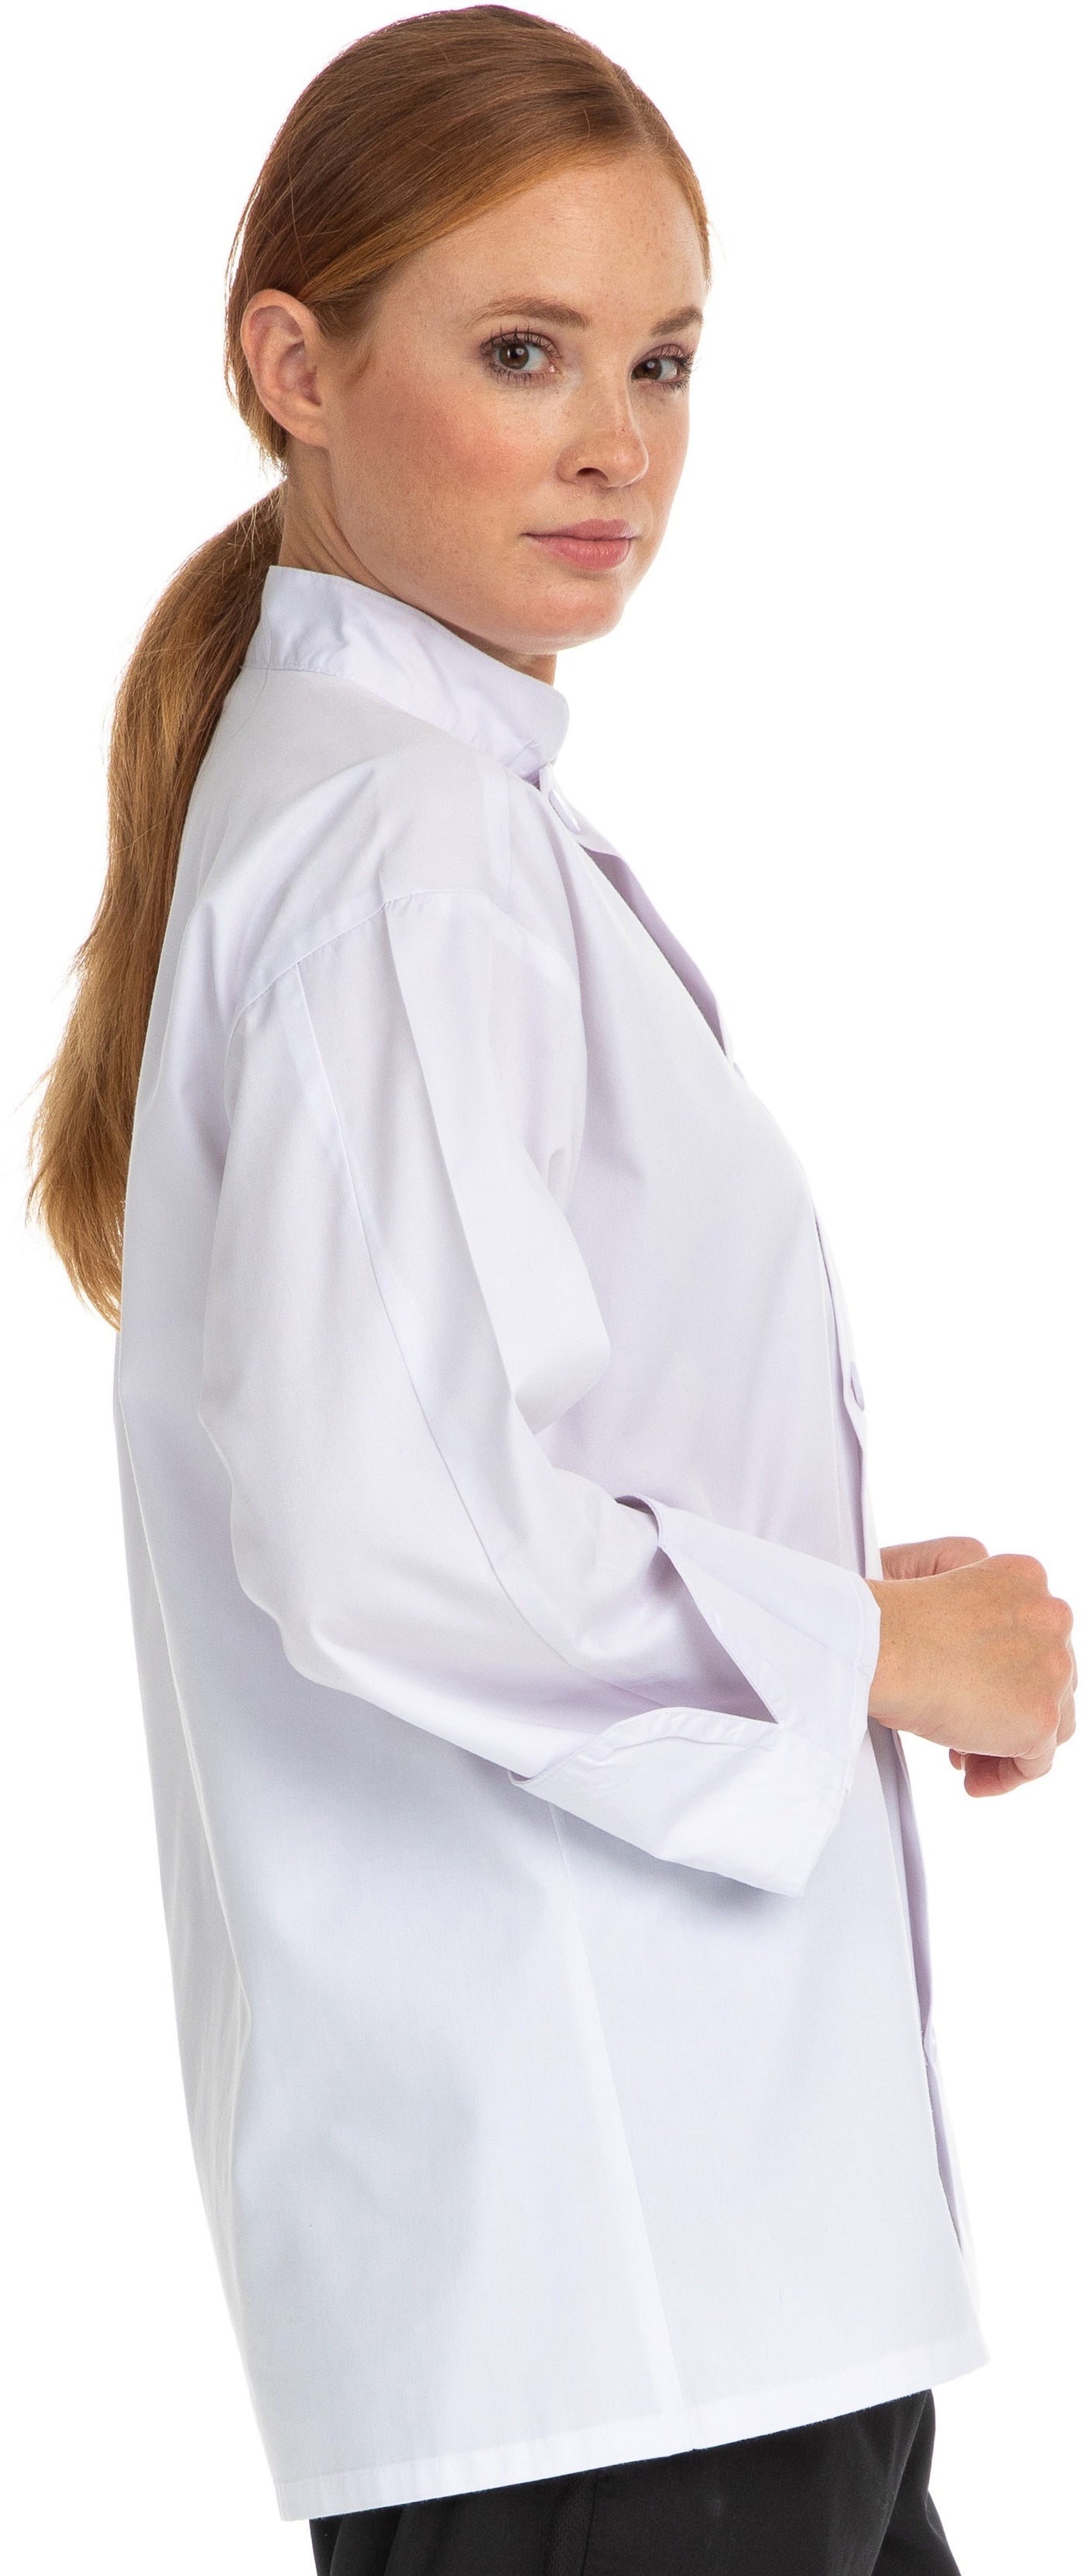 Muncy - Unisex Long Sleeve Chef Coat By MediChic XS-2XL / Black